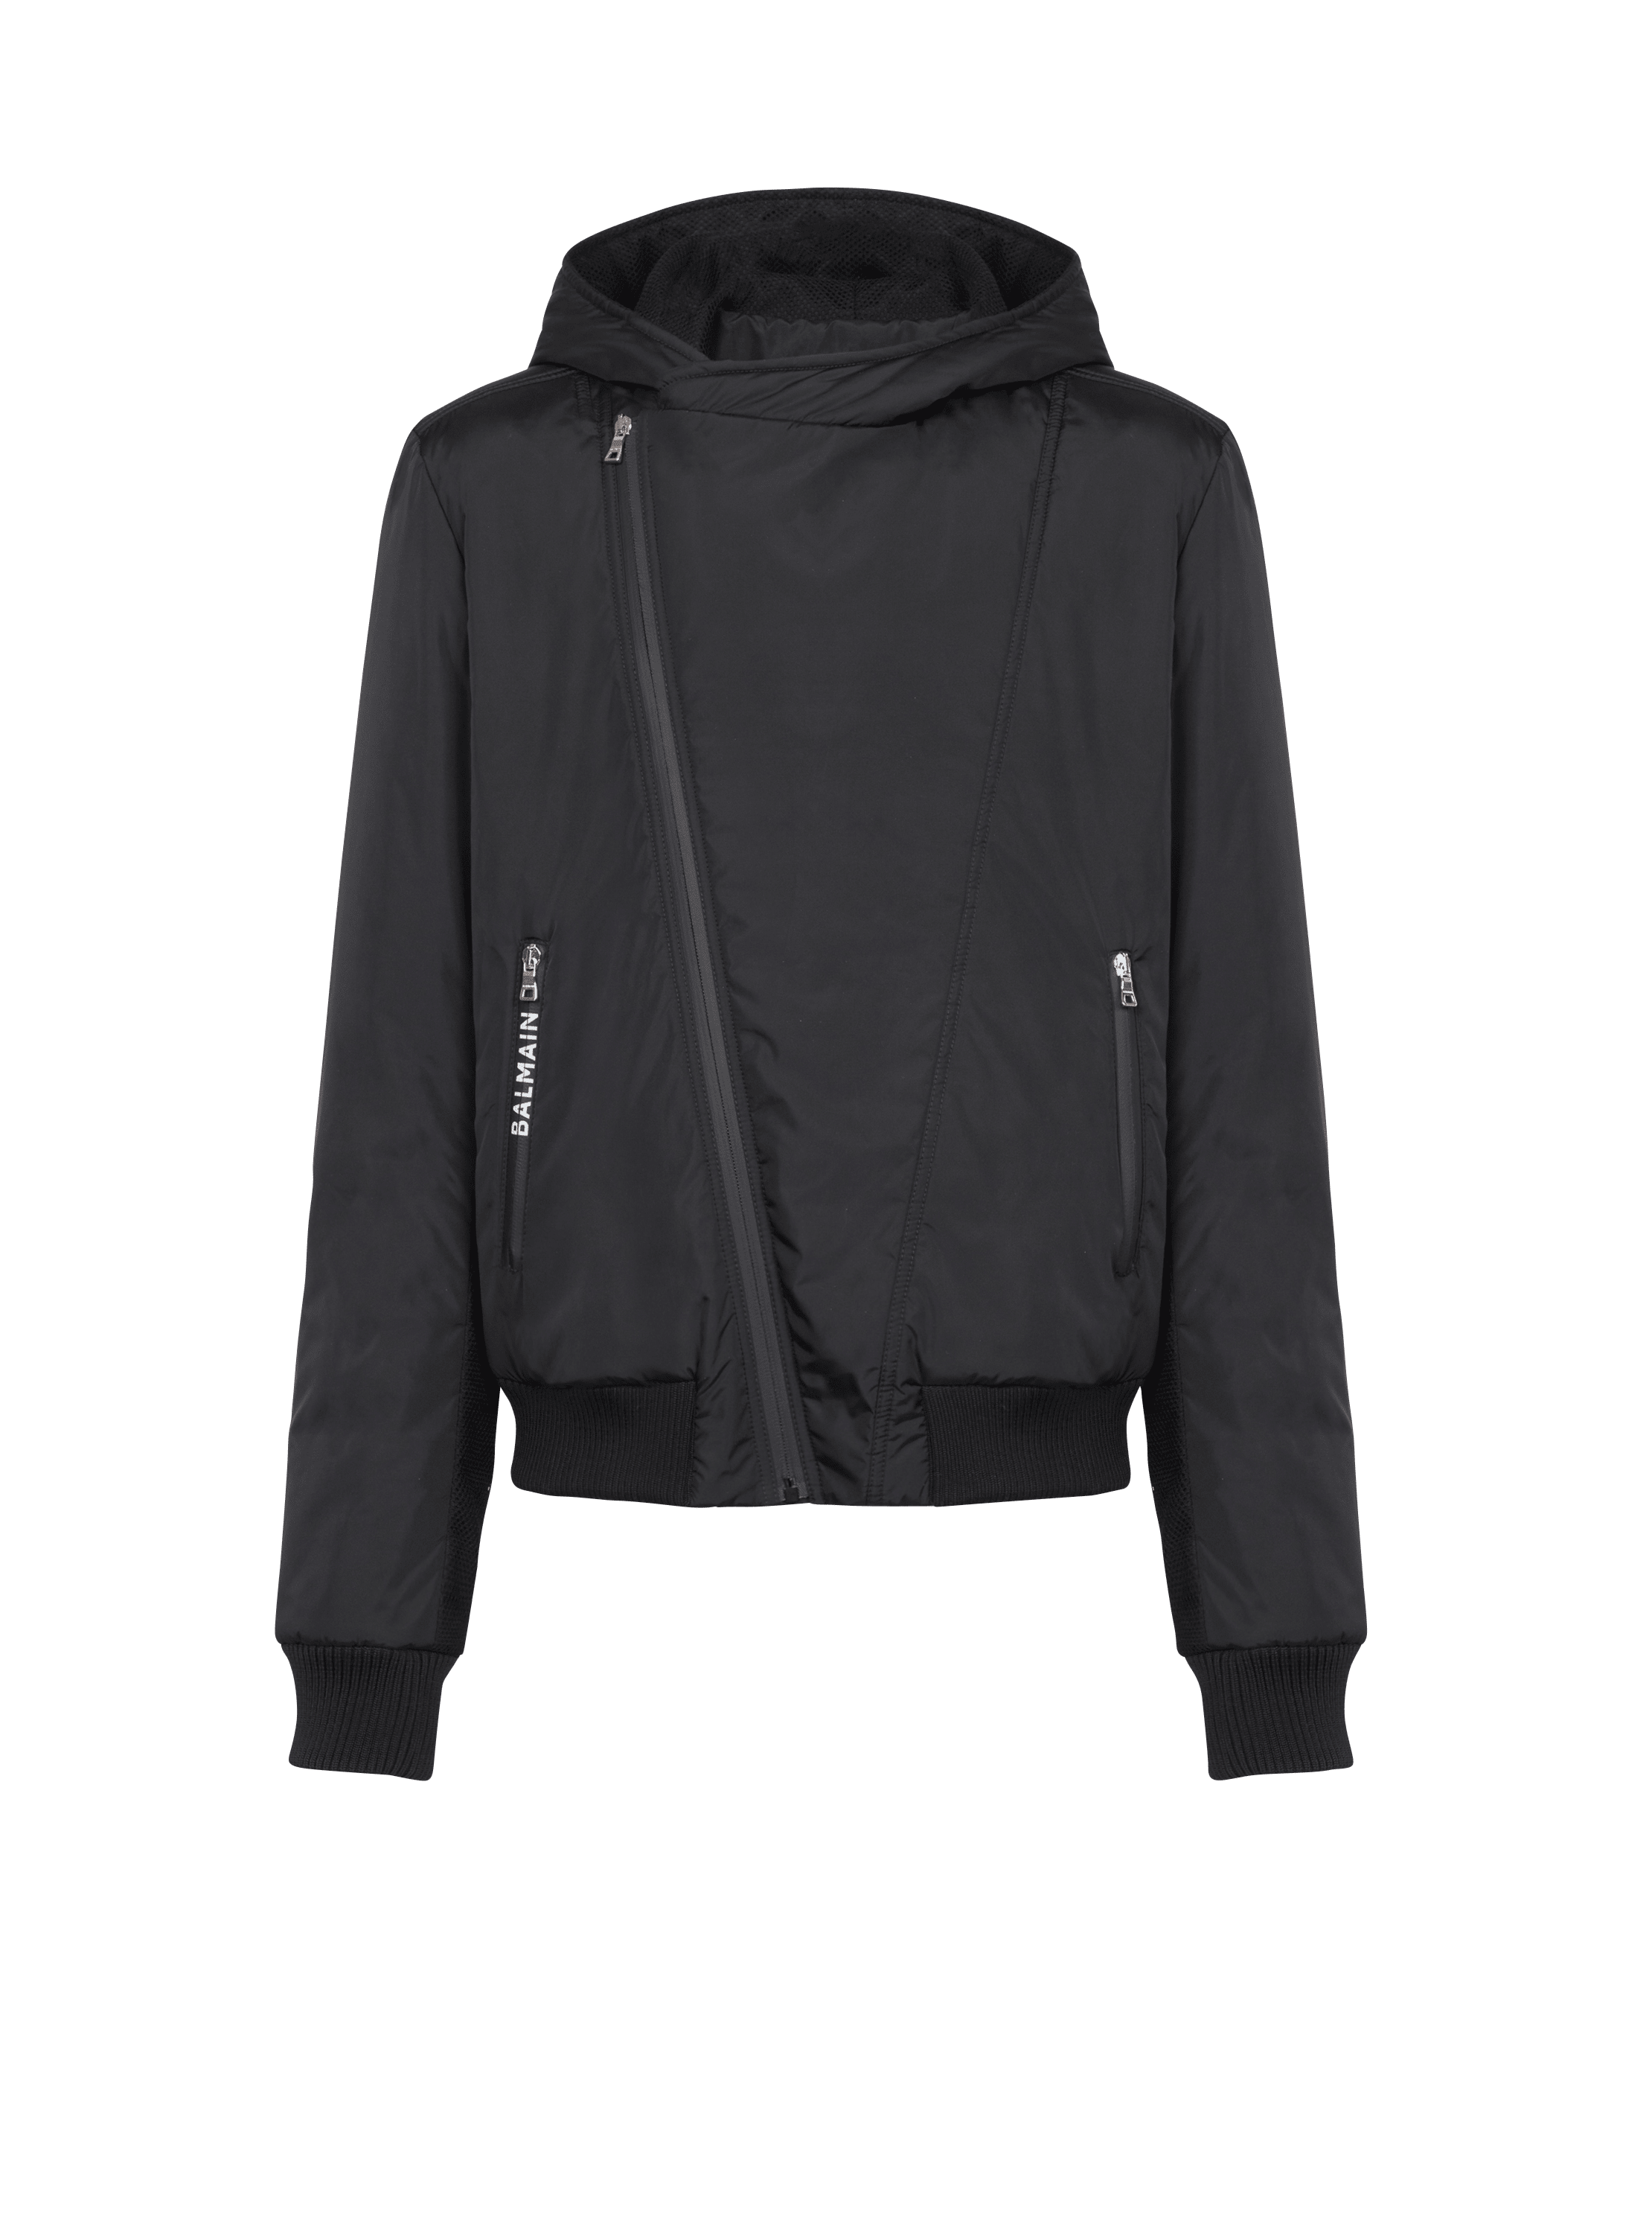 Zipped bomber jacket with nylon hood, black, hi-res